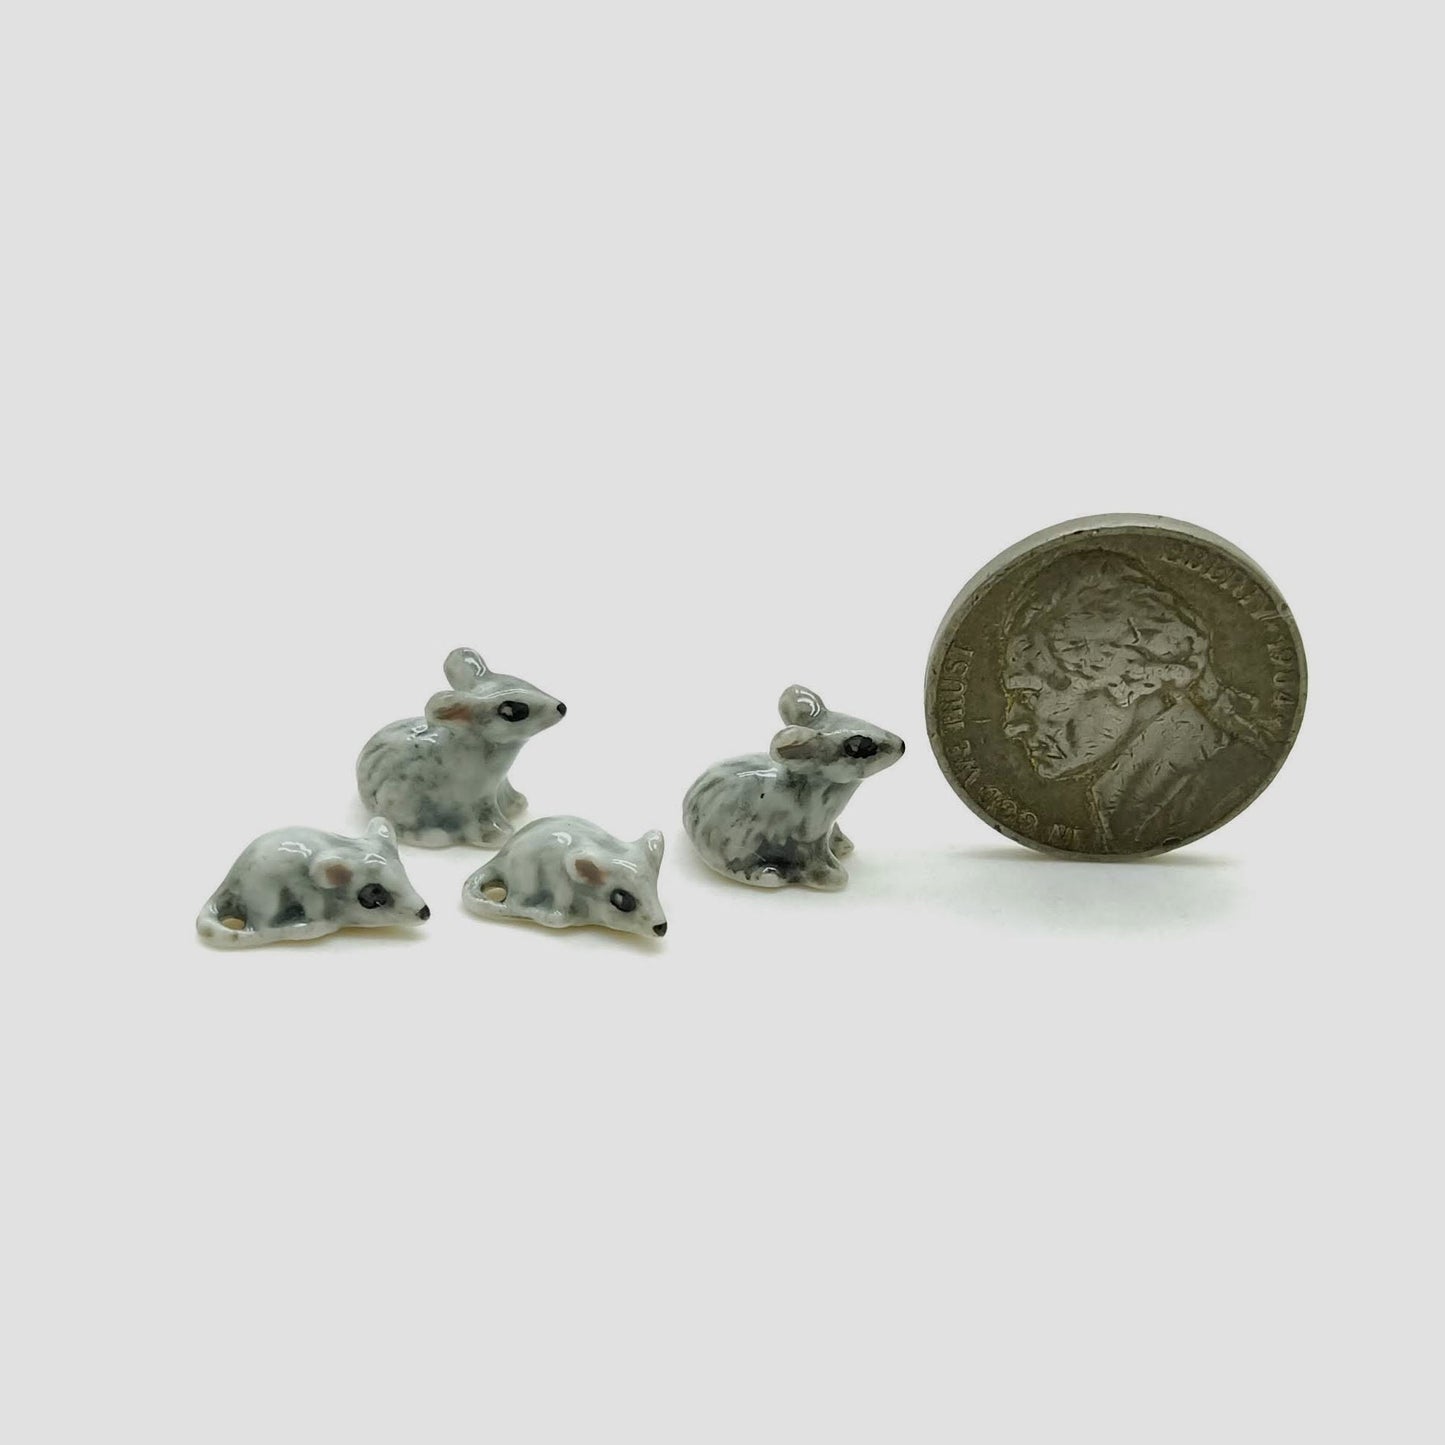 Set of 4 Tiny Rat Mouse Mice Gray Ceramic Figurine Dollhouse Miniature Gray